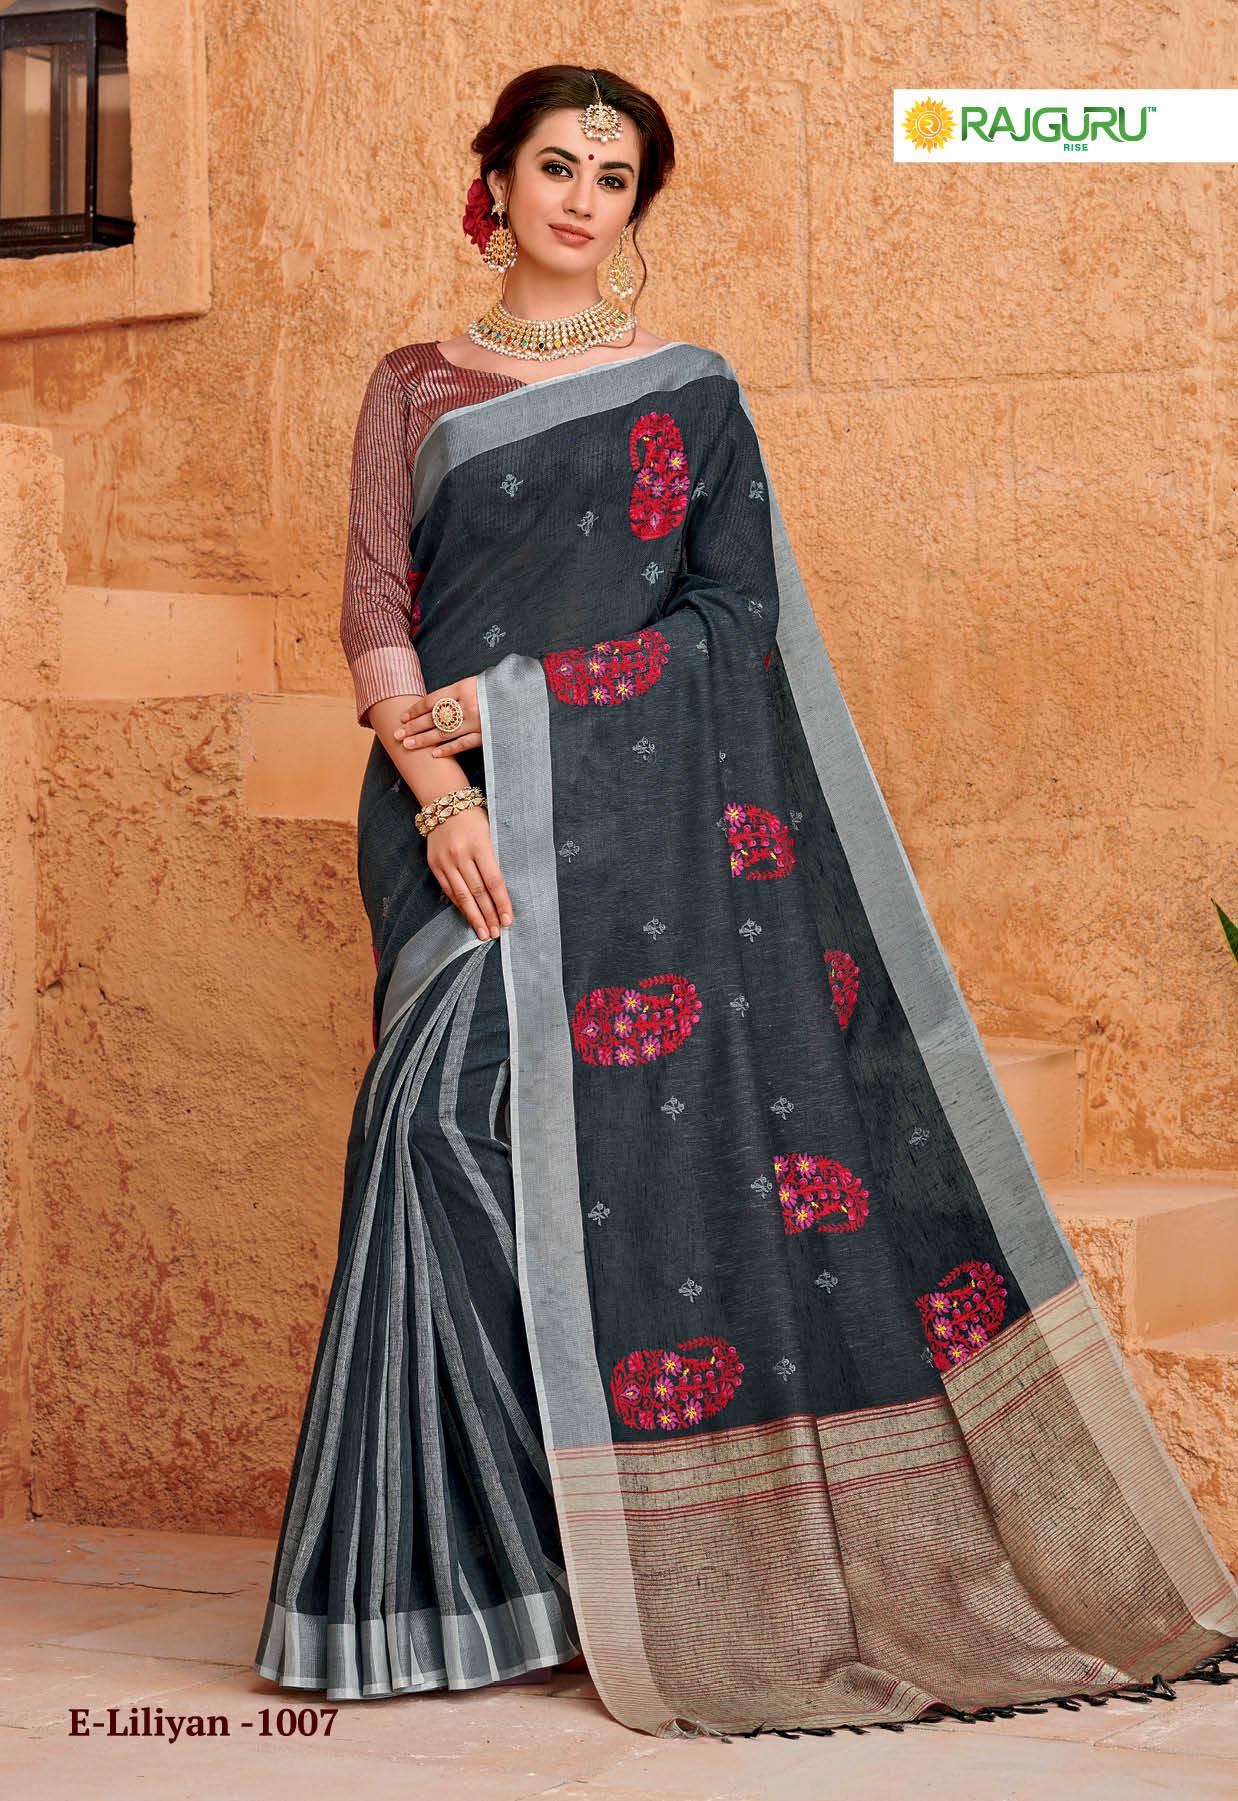 Rajguru Presents Liliyan Beautiful Designer Pure Lilen Silk With Embroidery Work Sarees Catalog Wholesaler